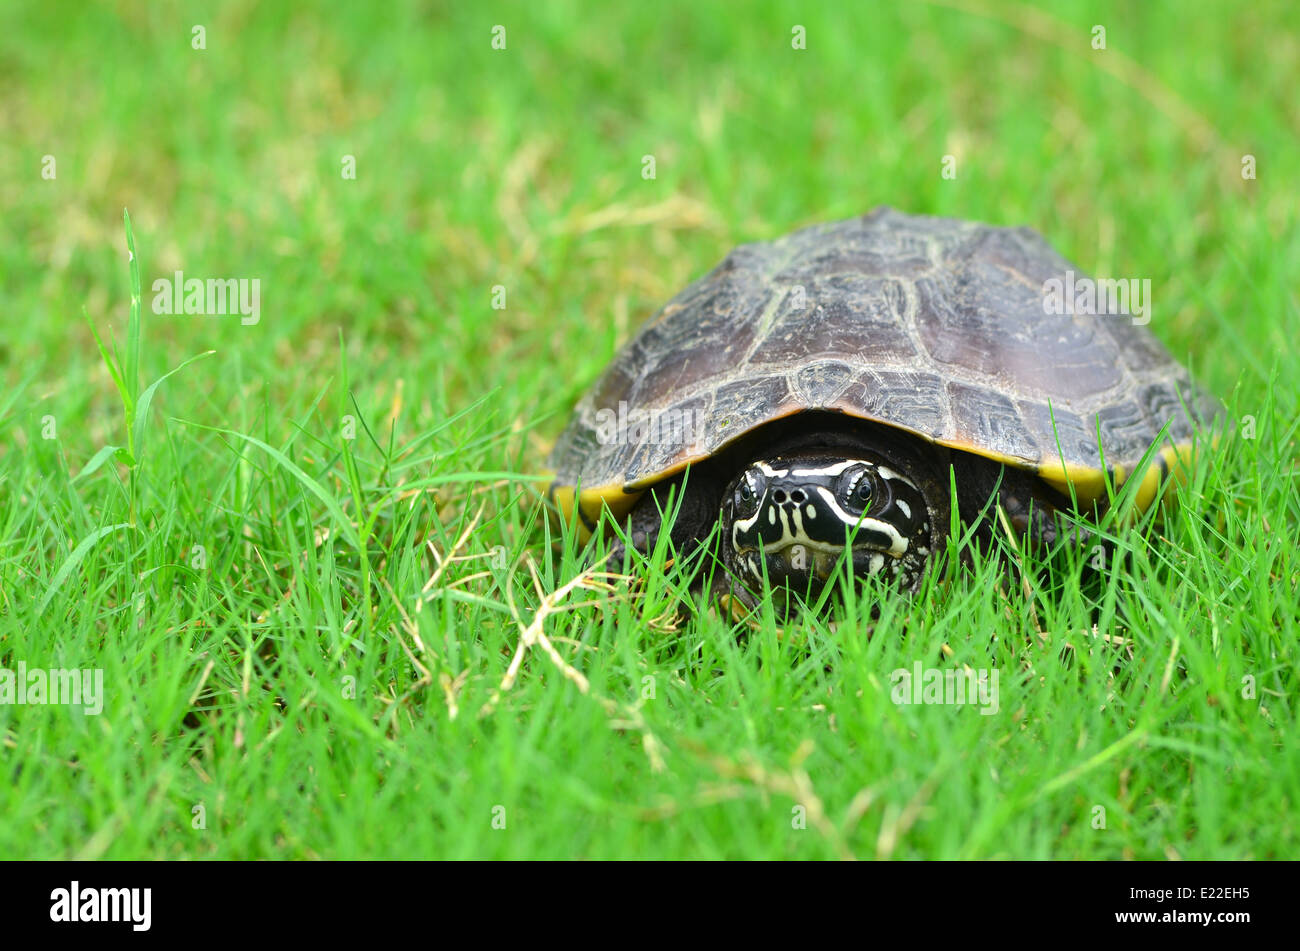 Turtle on grass Stock Photo